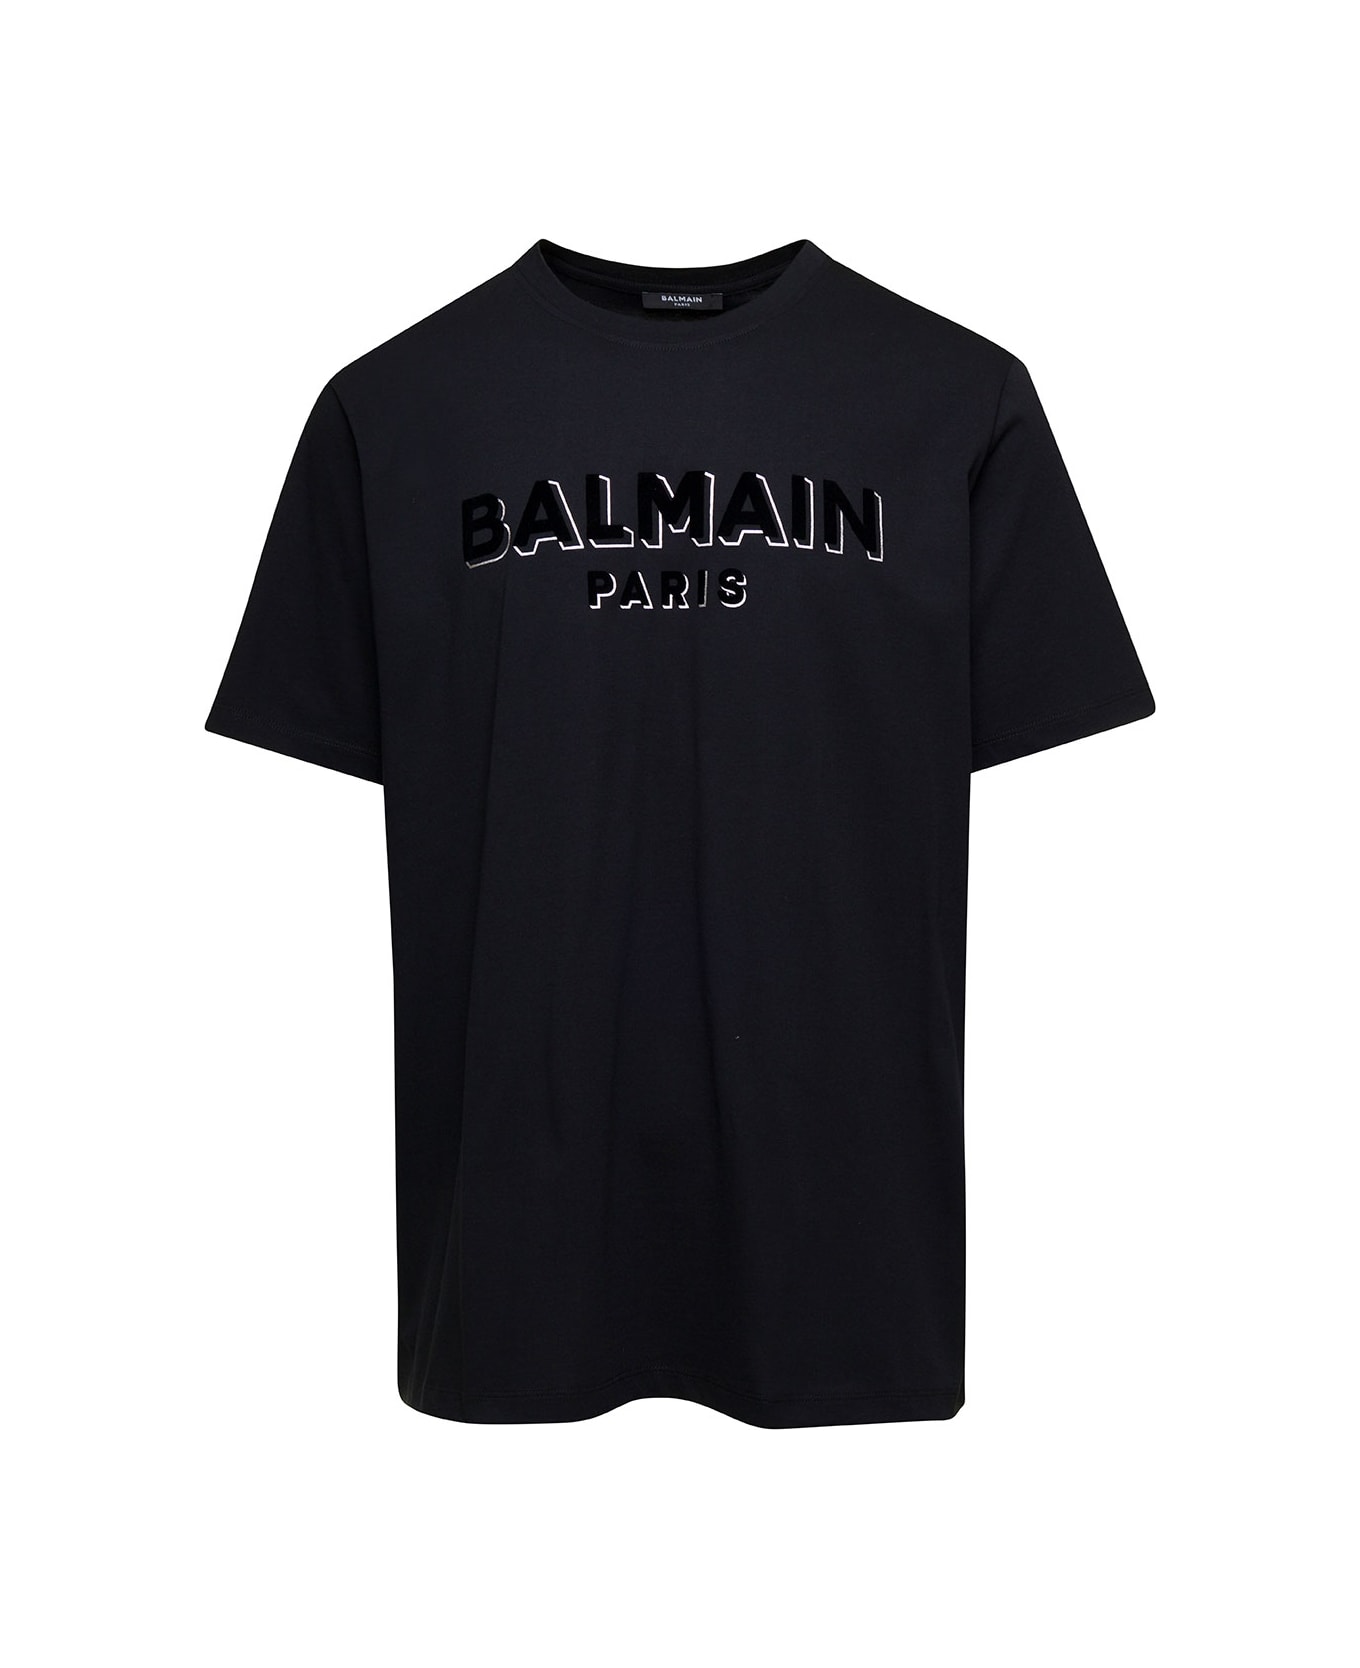 Balmain Flock & Foil T-shirt - Bulky Fit - Black シャツ